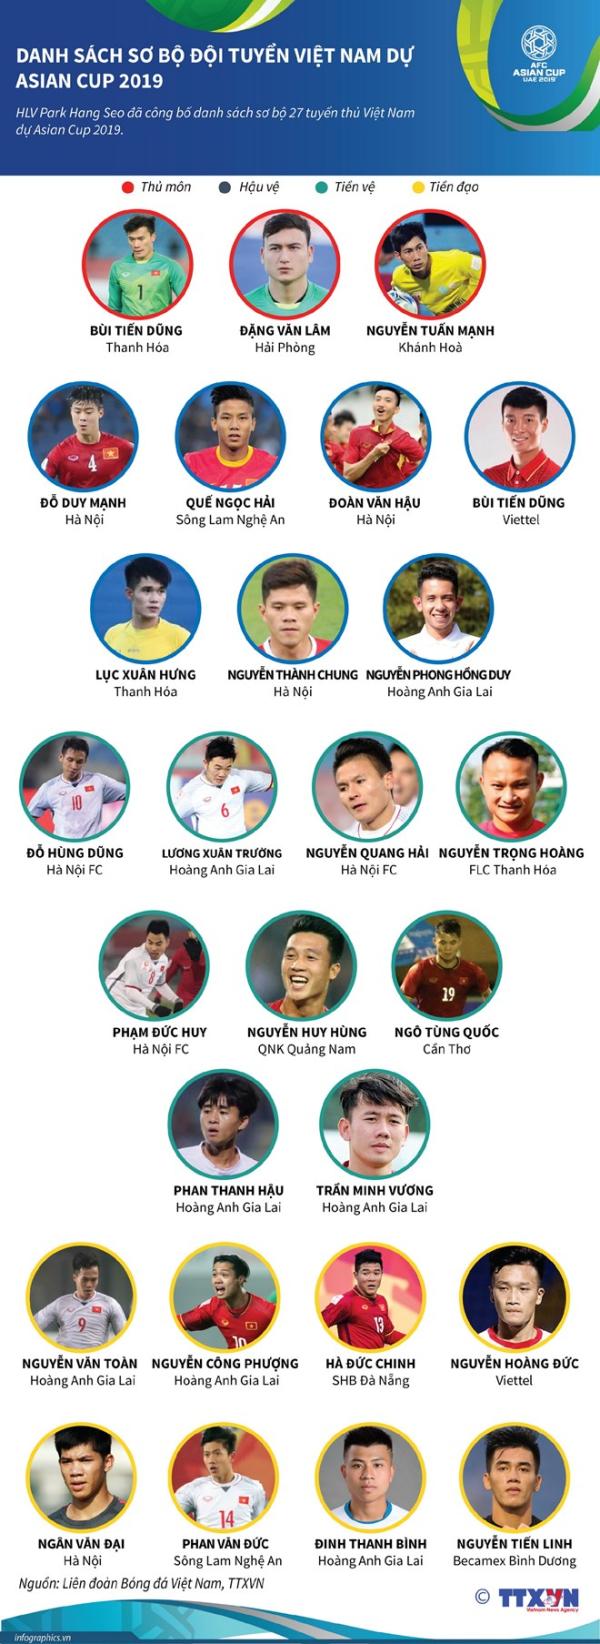 infographics danh sach so bo doi tuyen viet nam du asian cup 2019